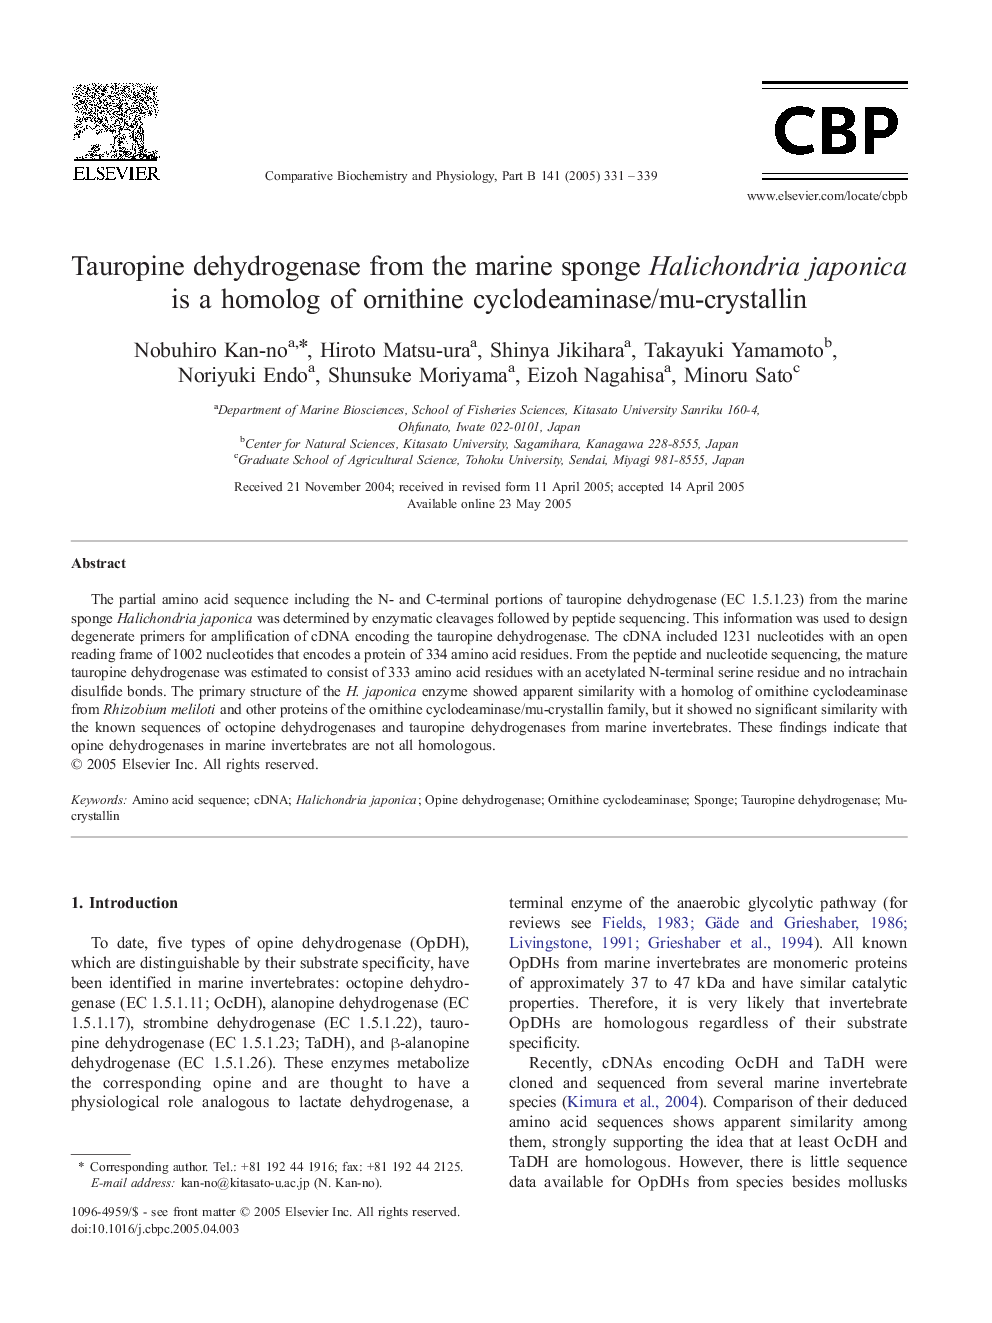 Tauropine dehydrogenase from the marine sponge Halichondria japonica is a homolog of ornithine cyclodeaminase/mu-crystallin